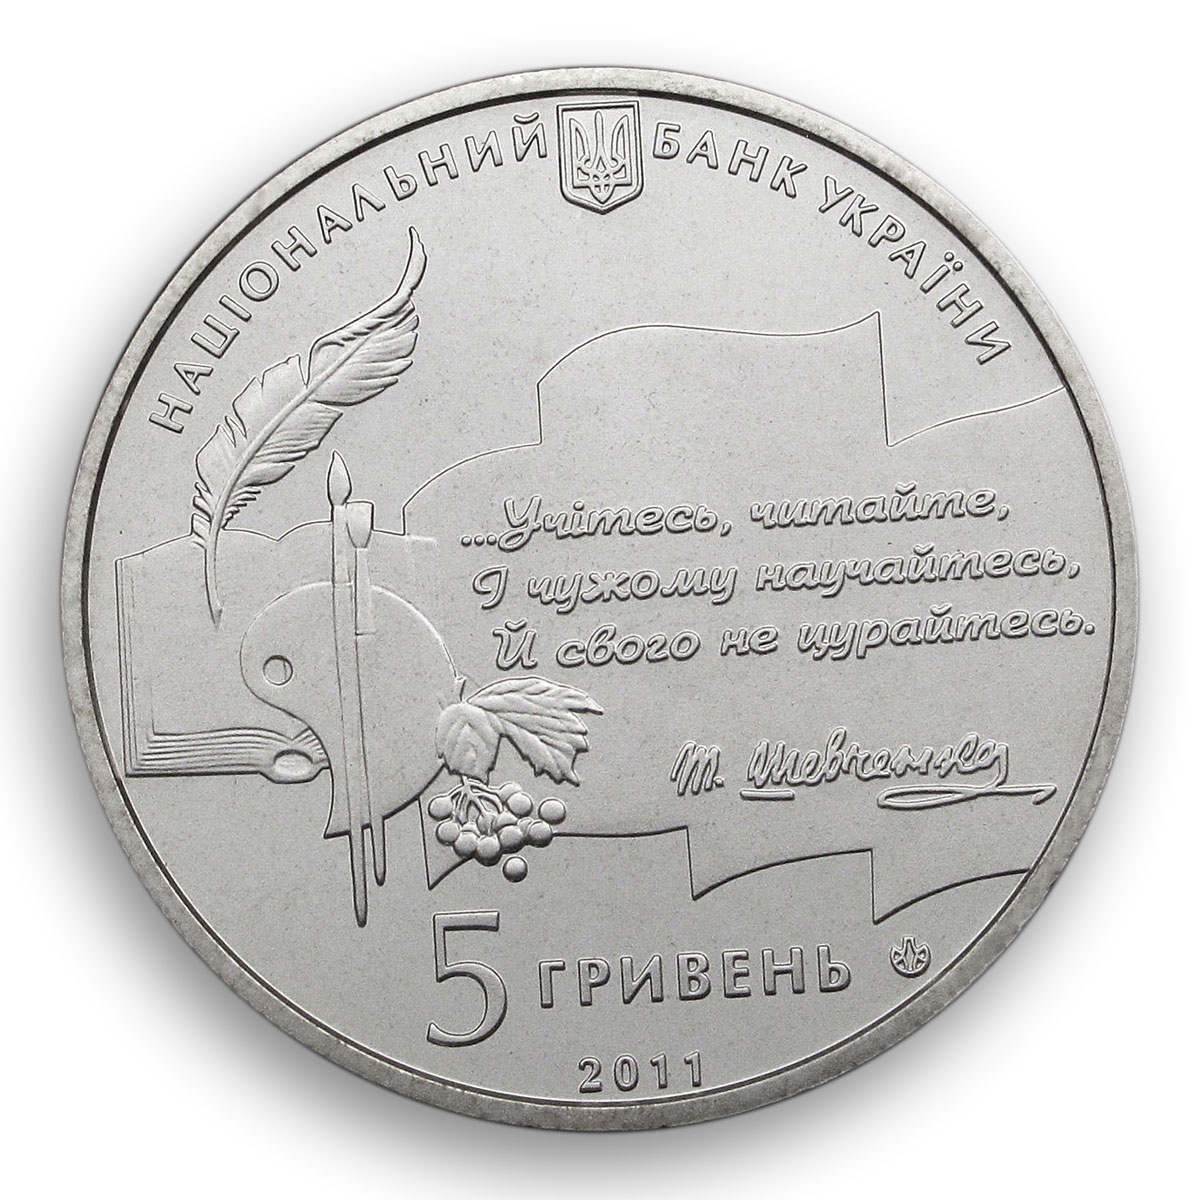 Ukraine 5 hryvnia 50th anniversary Taras Shevchenko Prize award nickel coin 2011